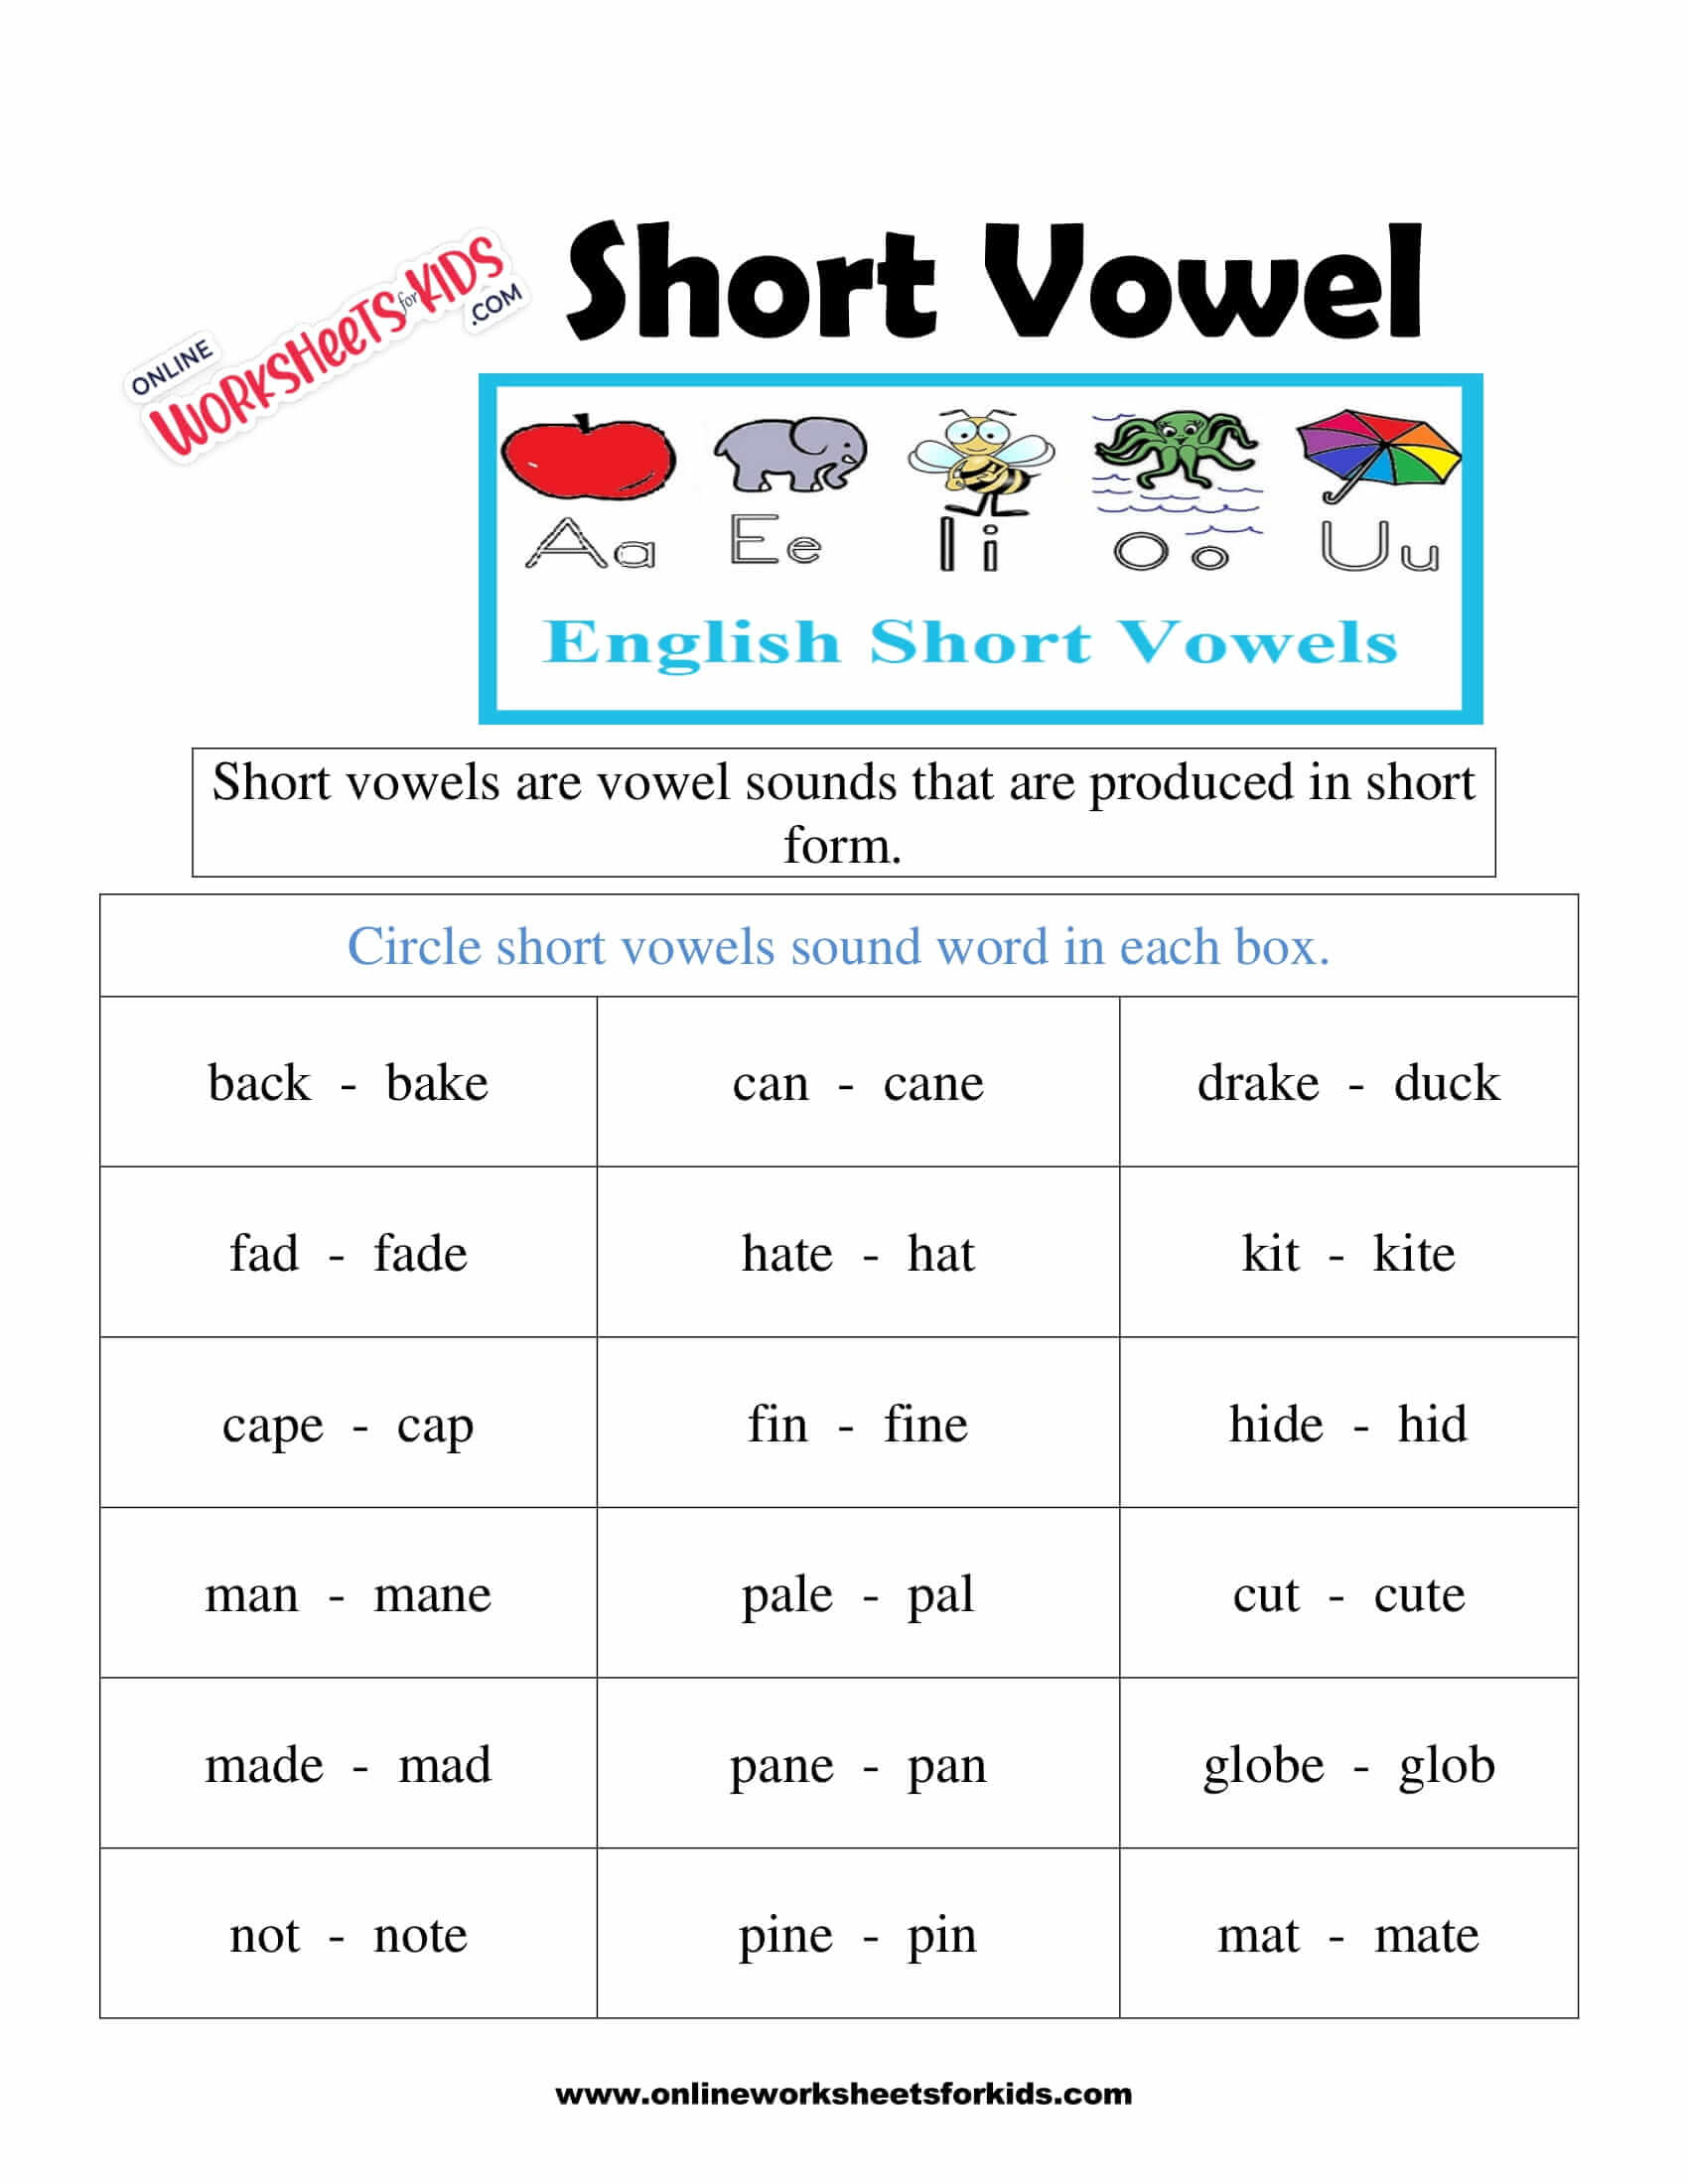 free short vowel worksheets and printable for kids